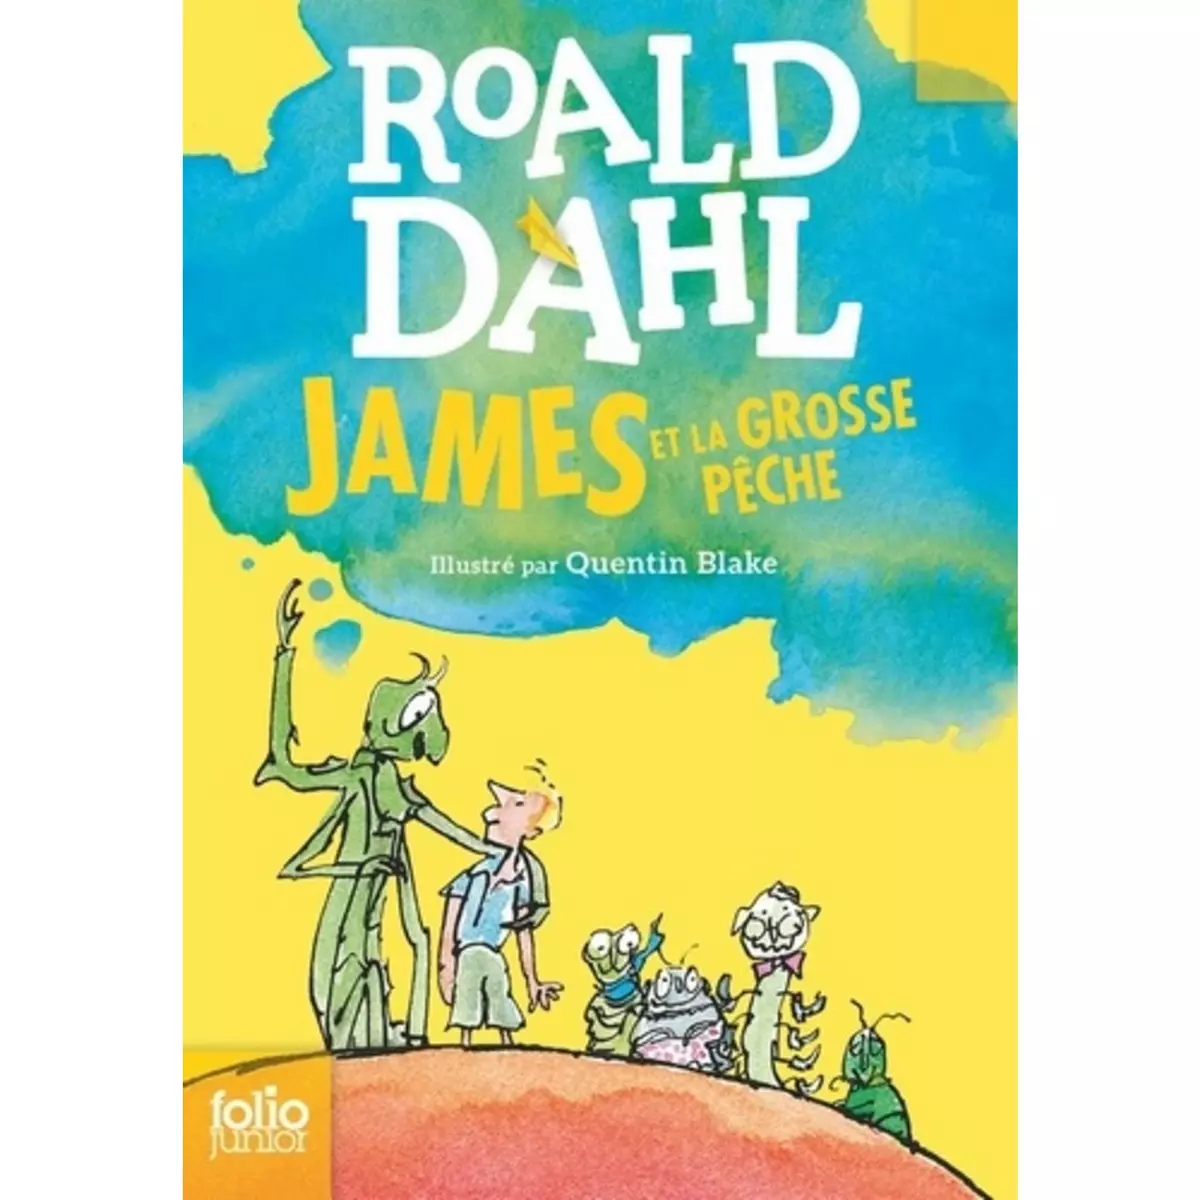  JAMES ET LA GROSSE PECHE, Dahl Roald